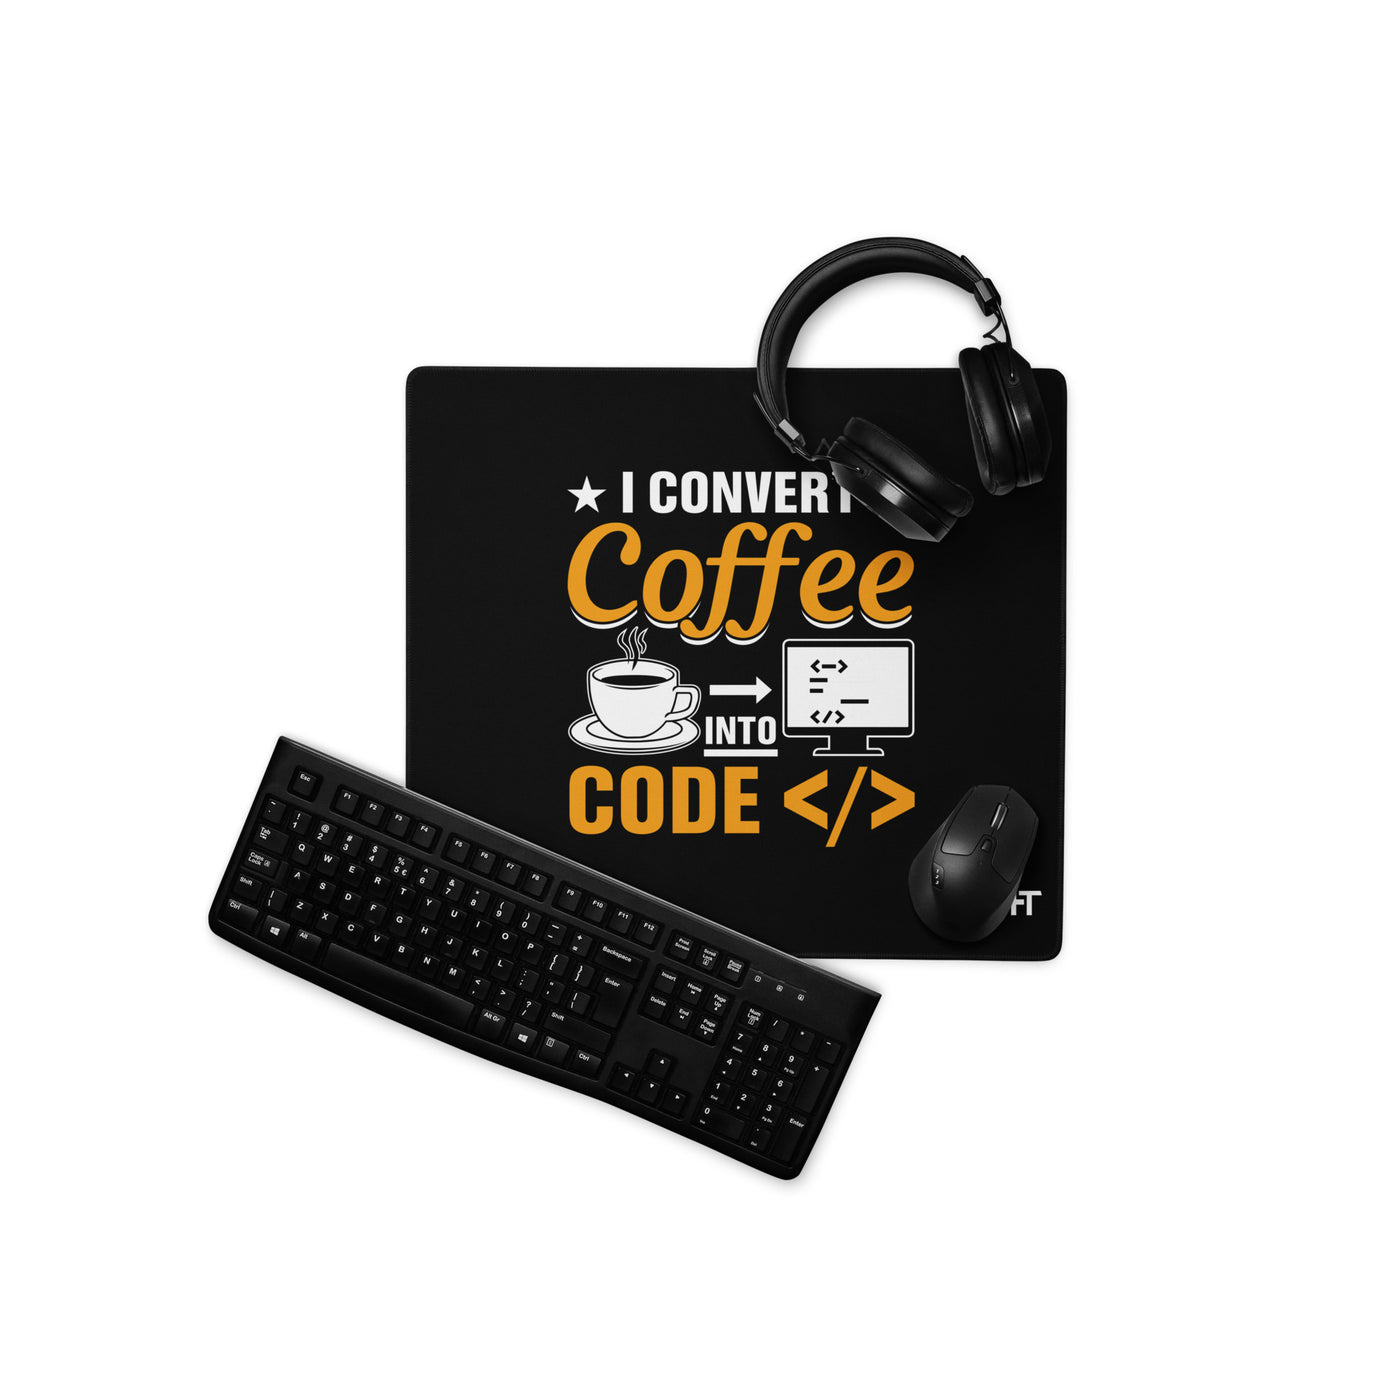 I Convert Coffee into Code </> - Desk Mat